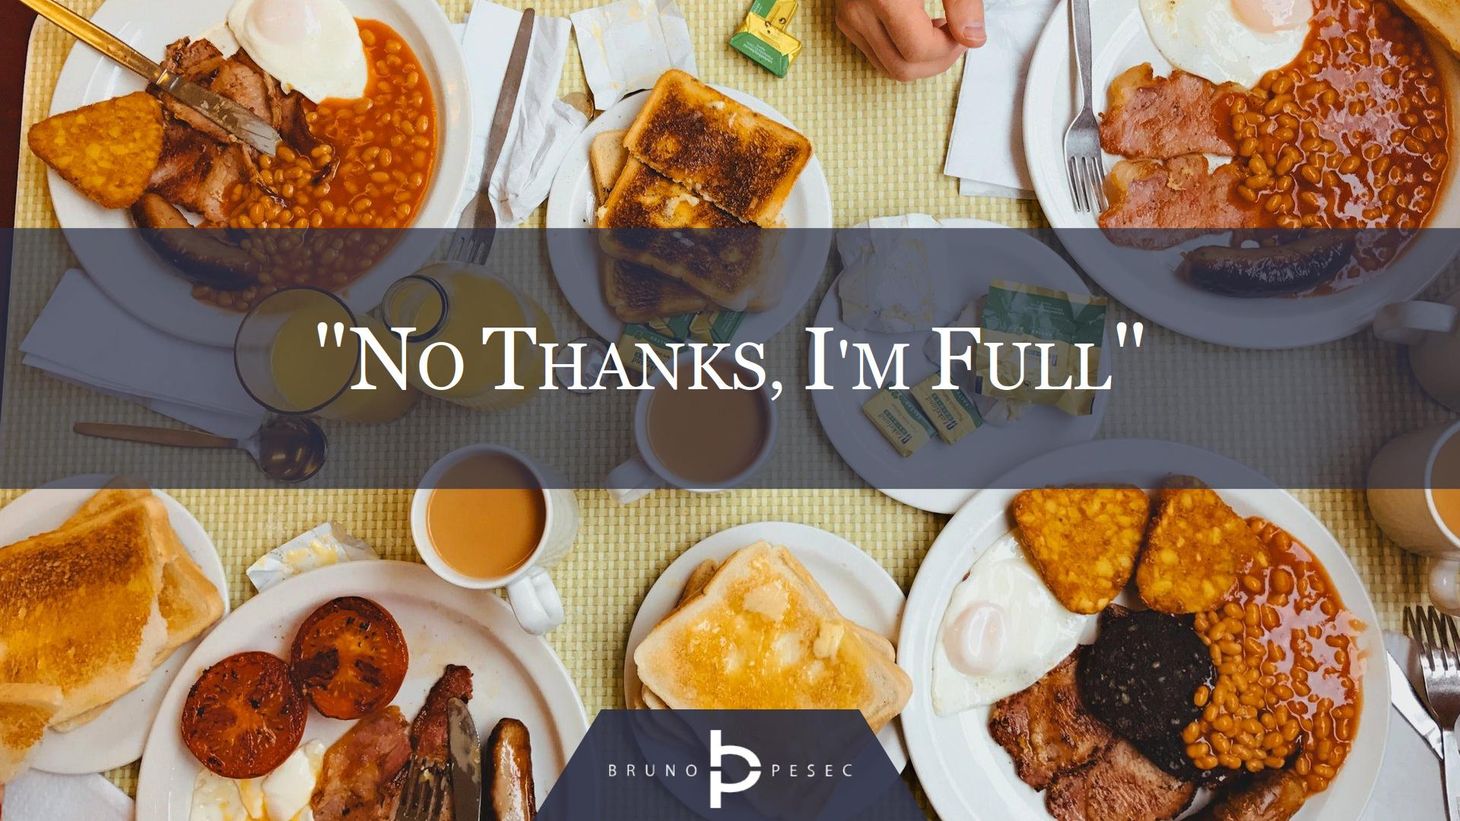 "No thanks, I'm full."